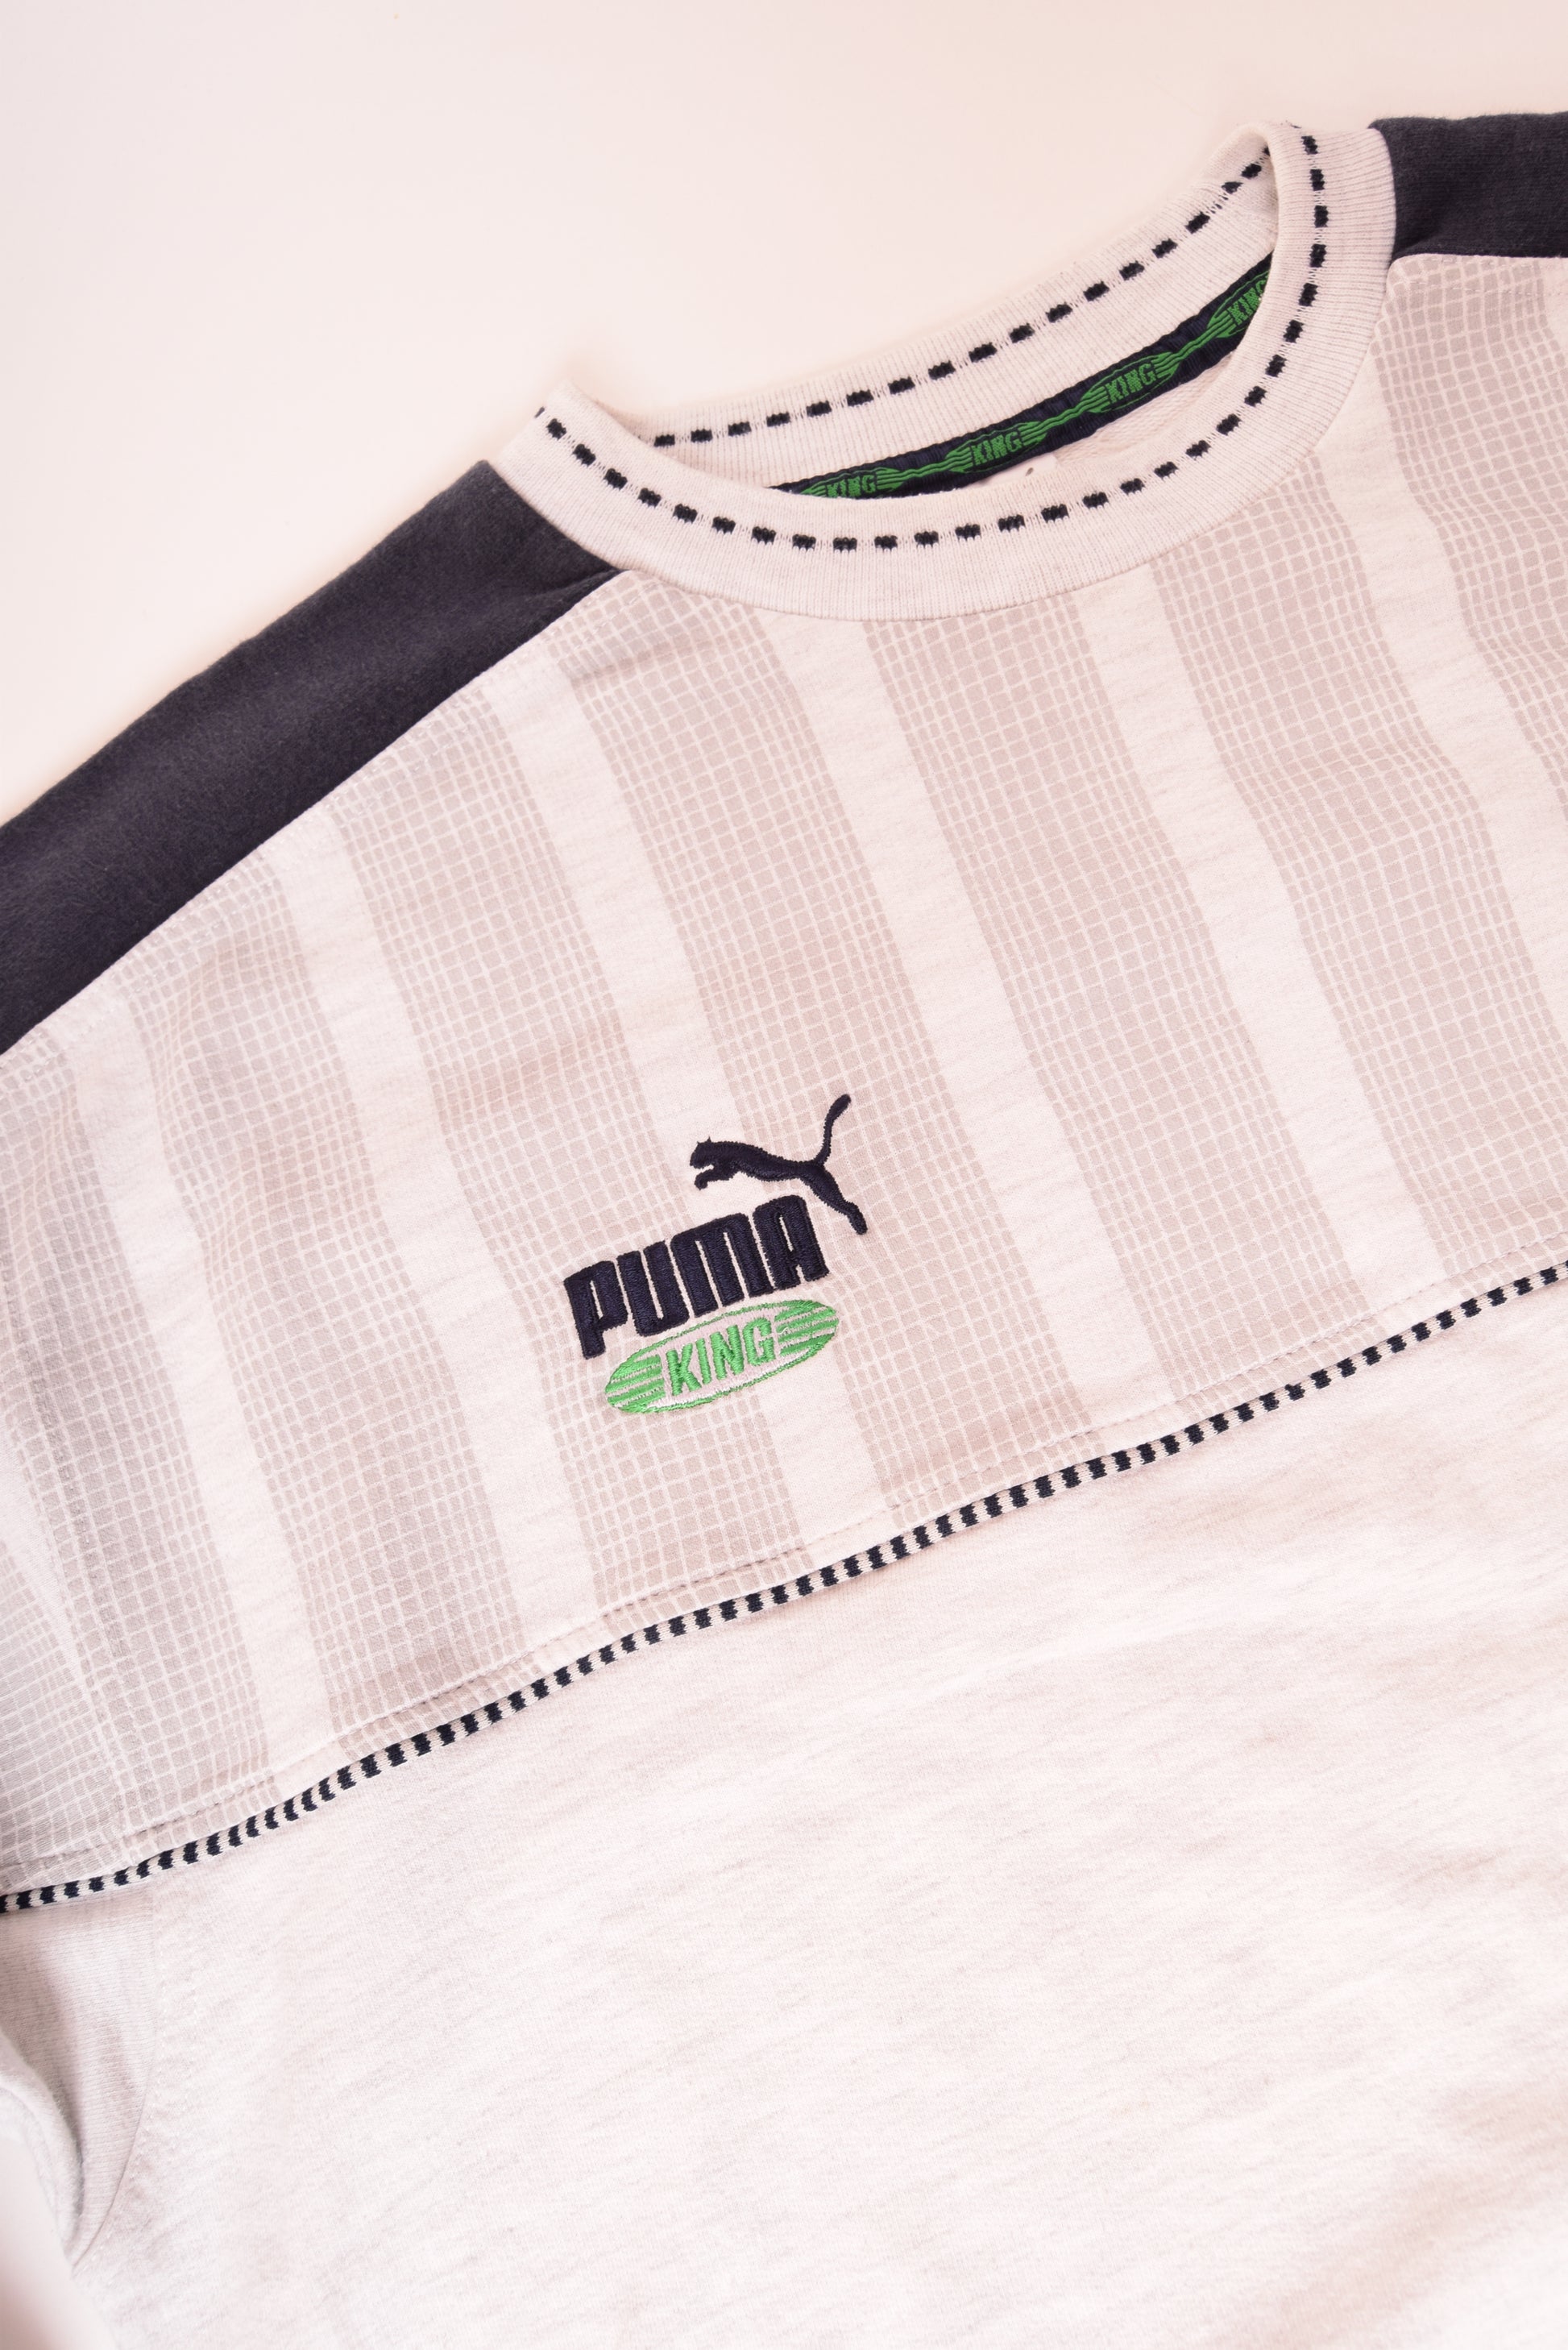 Vintage Puma King Crew Neck Sweatshirt Size L